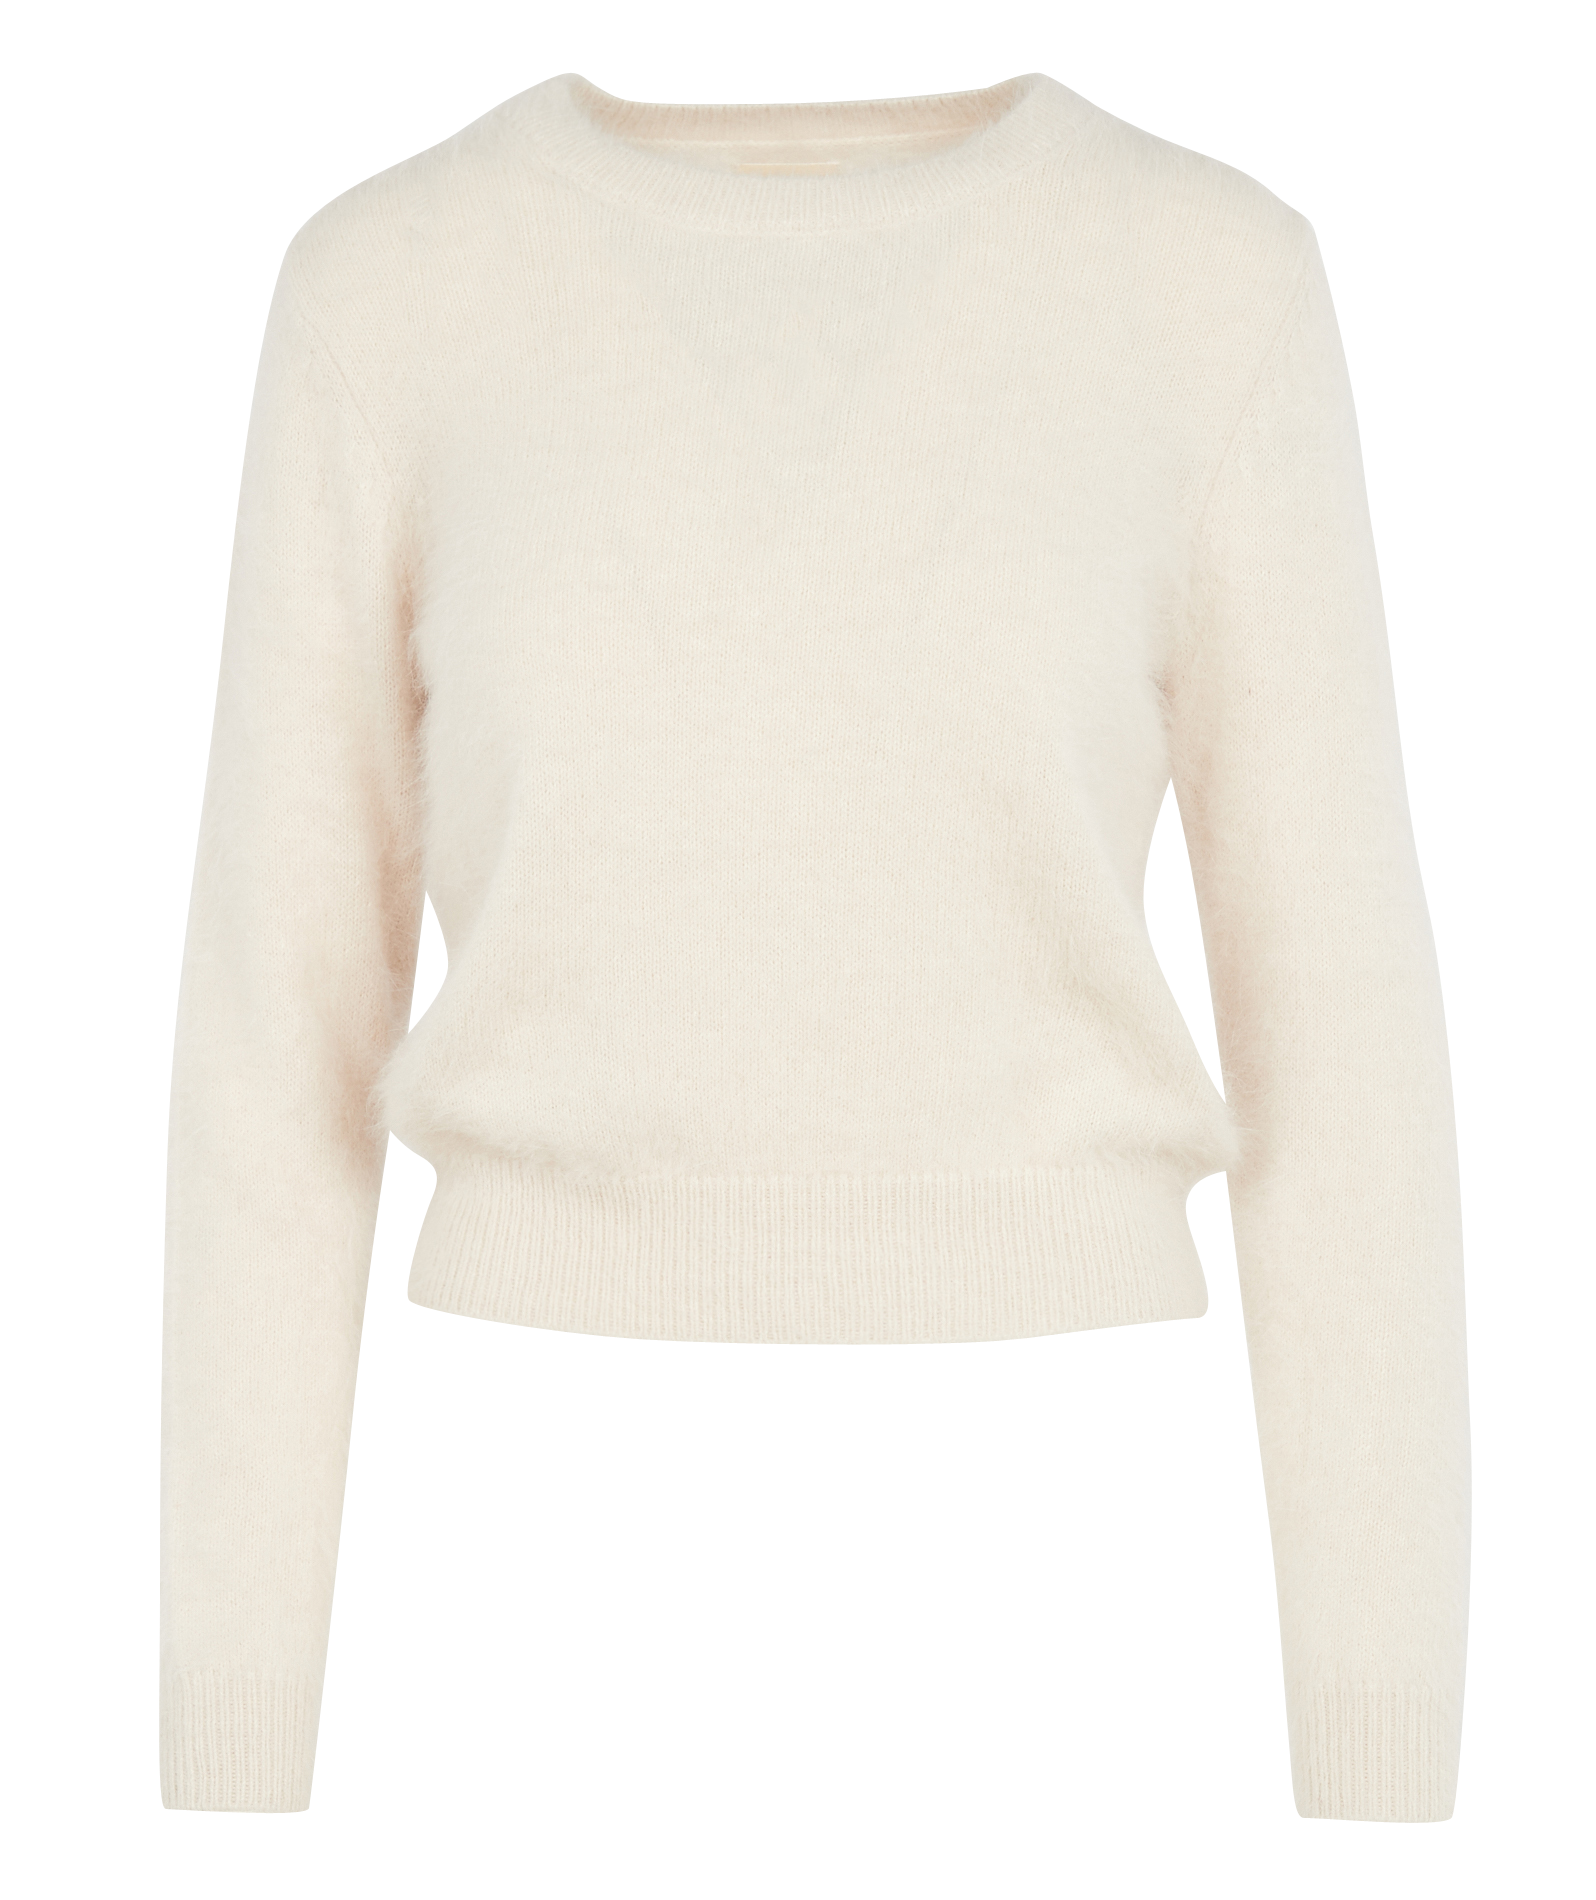 Kleding Dameskleding Sweaters Pullovers Angora Bruiloft Trui 